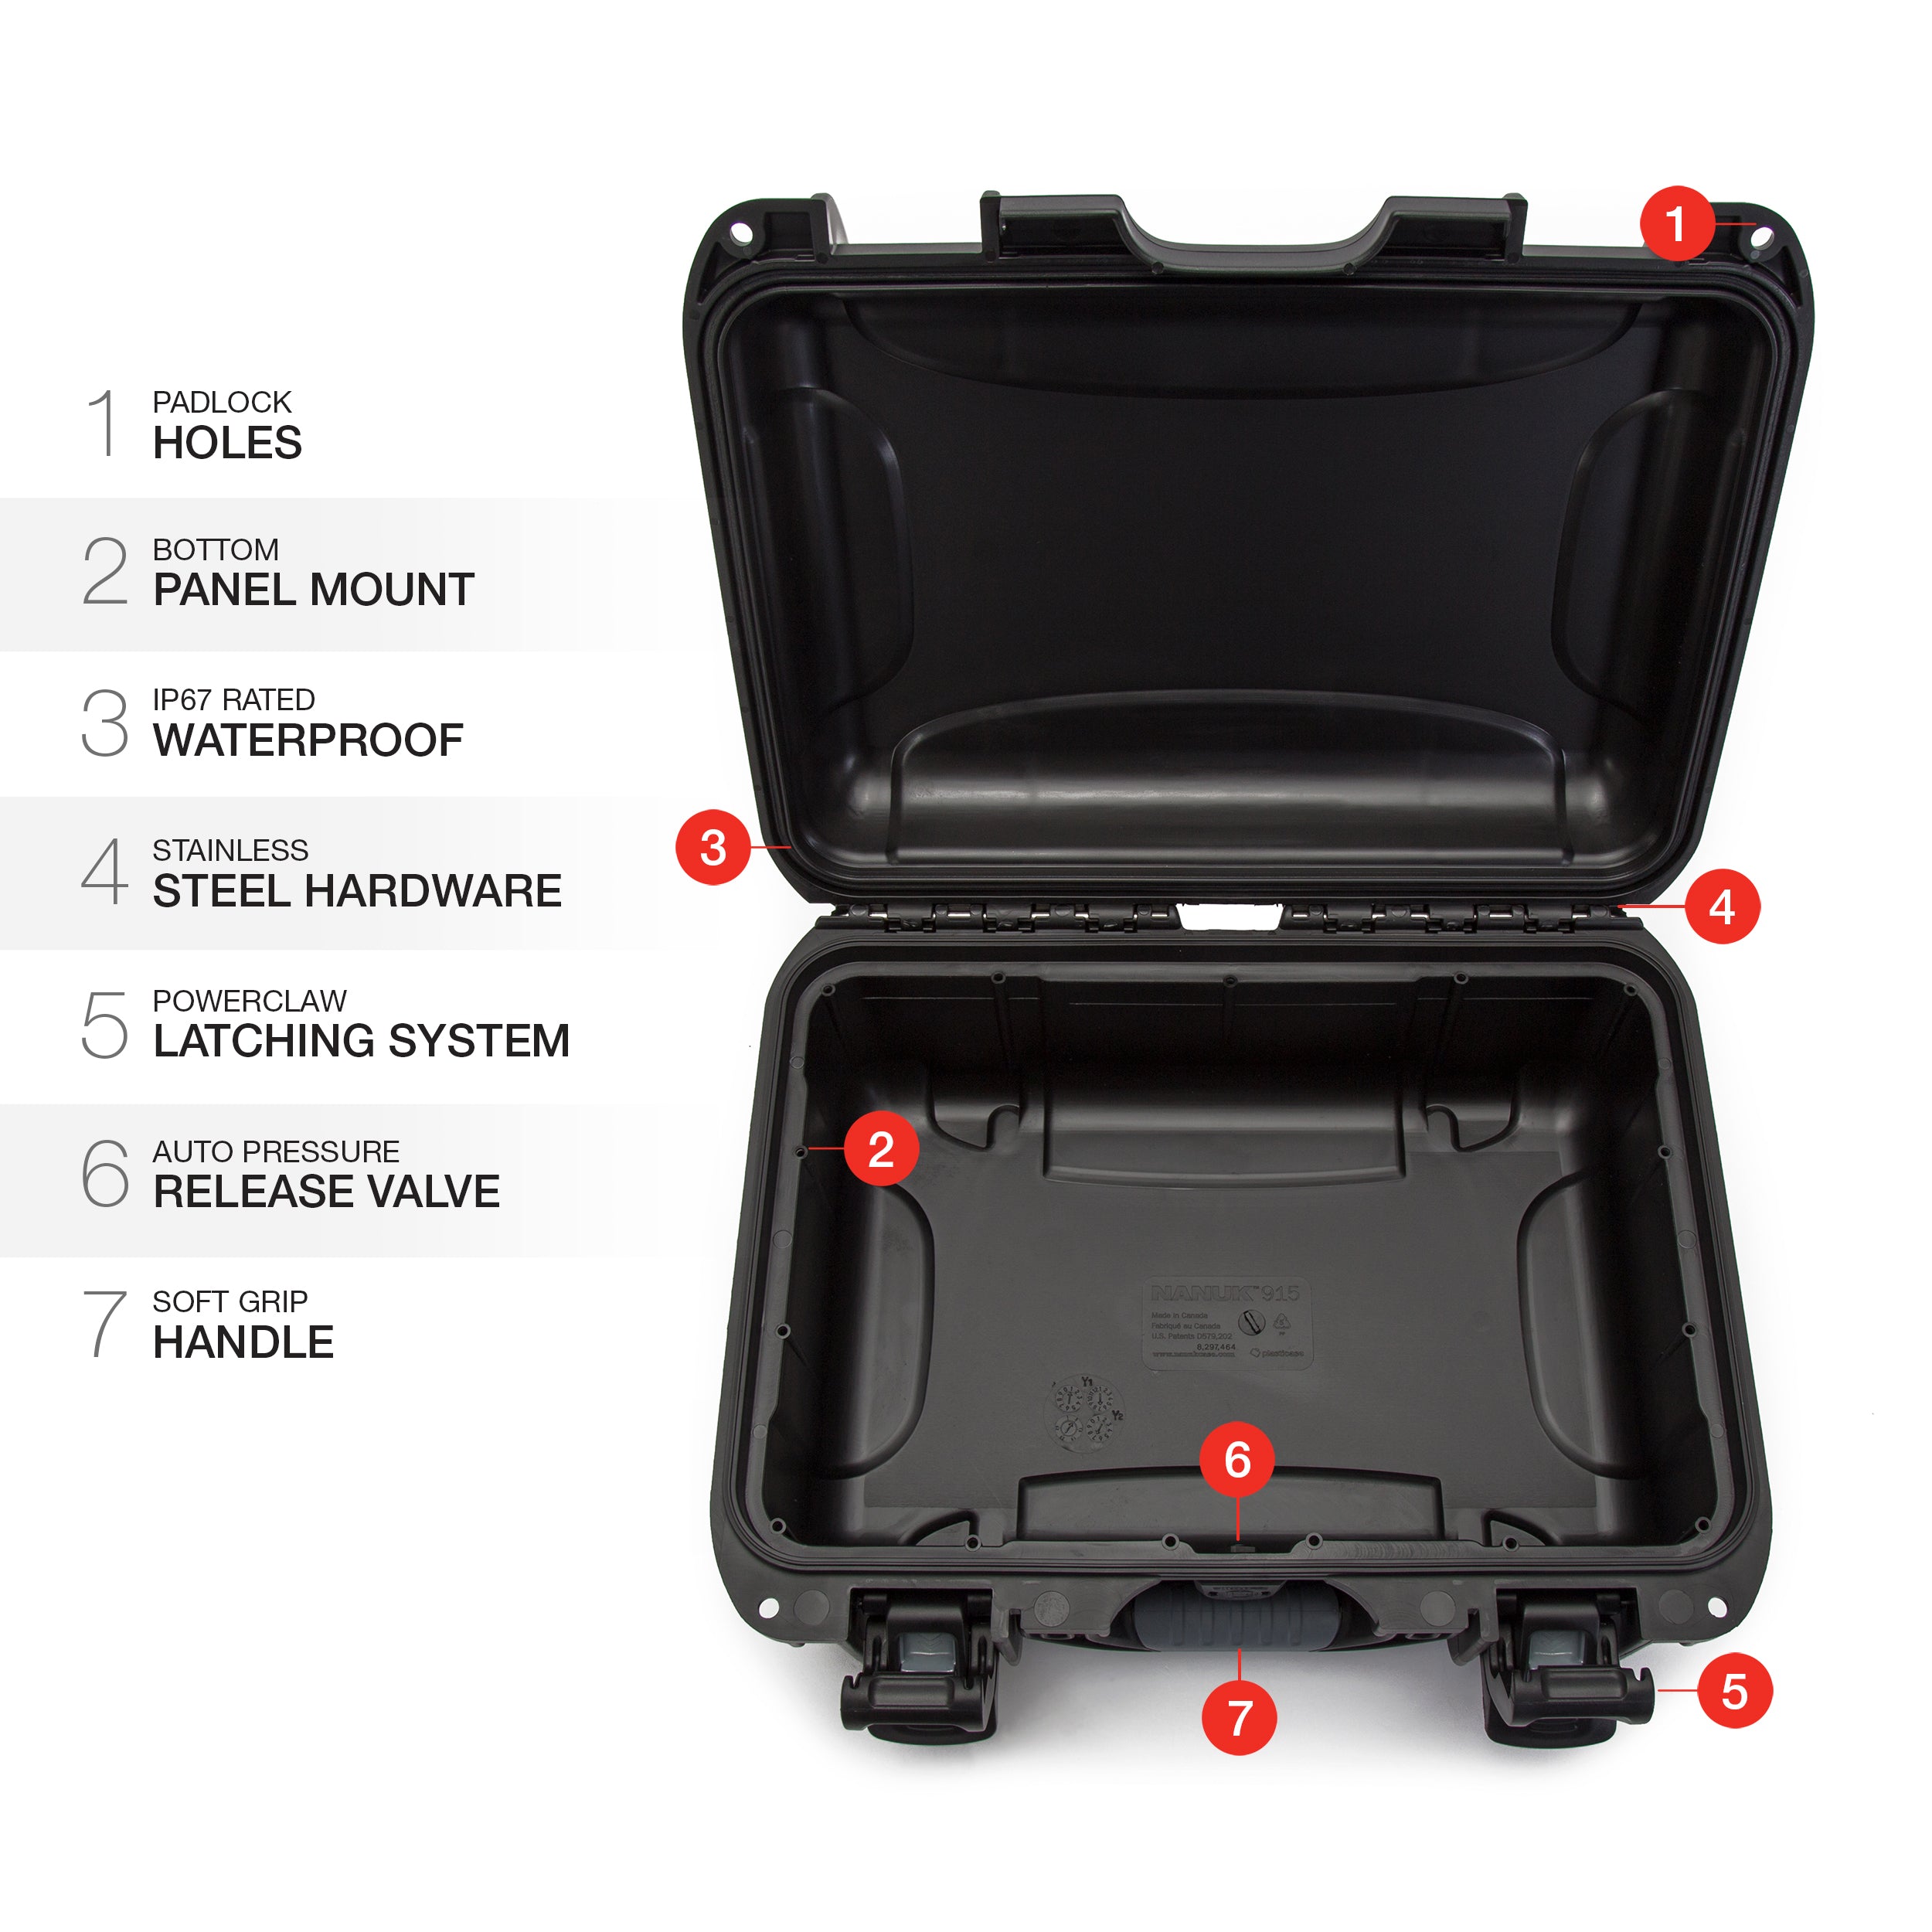 Nanuk 915-0001 Waterproof Hard Case - Black